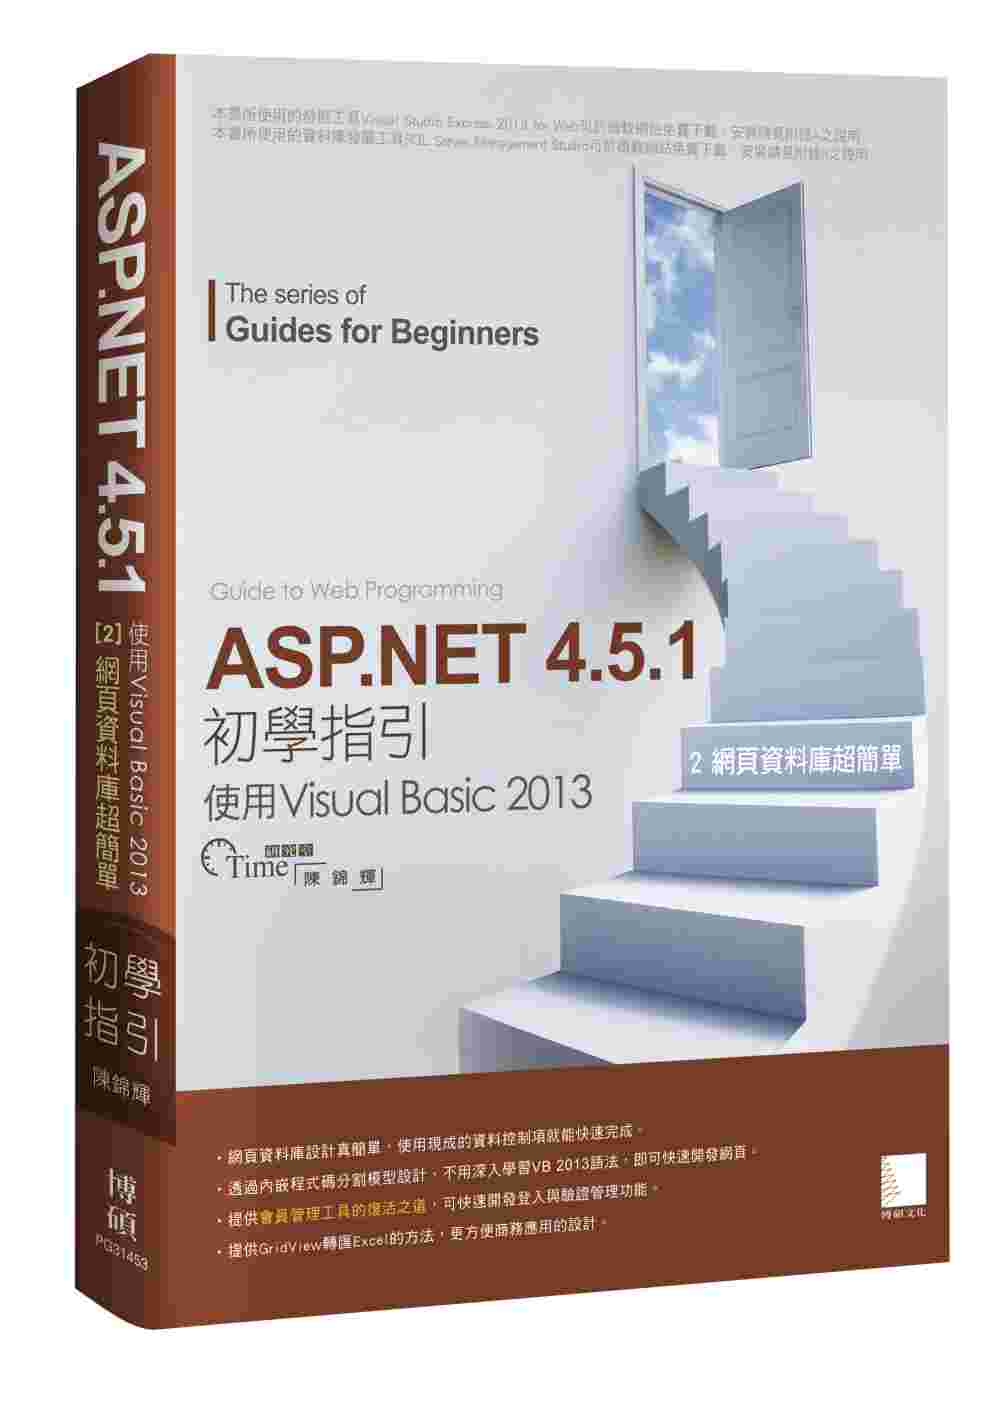 ASP.NET 4.5.1 初學指引[2] - 使用Visu...